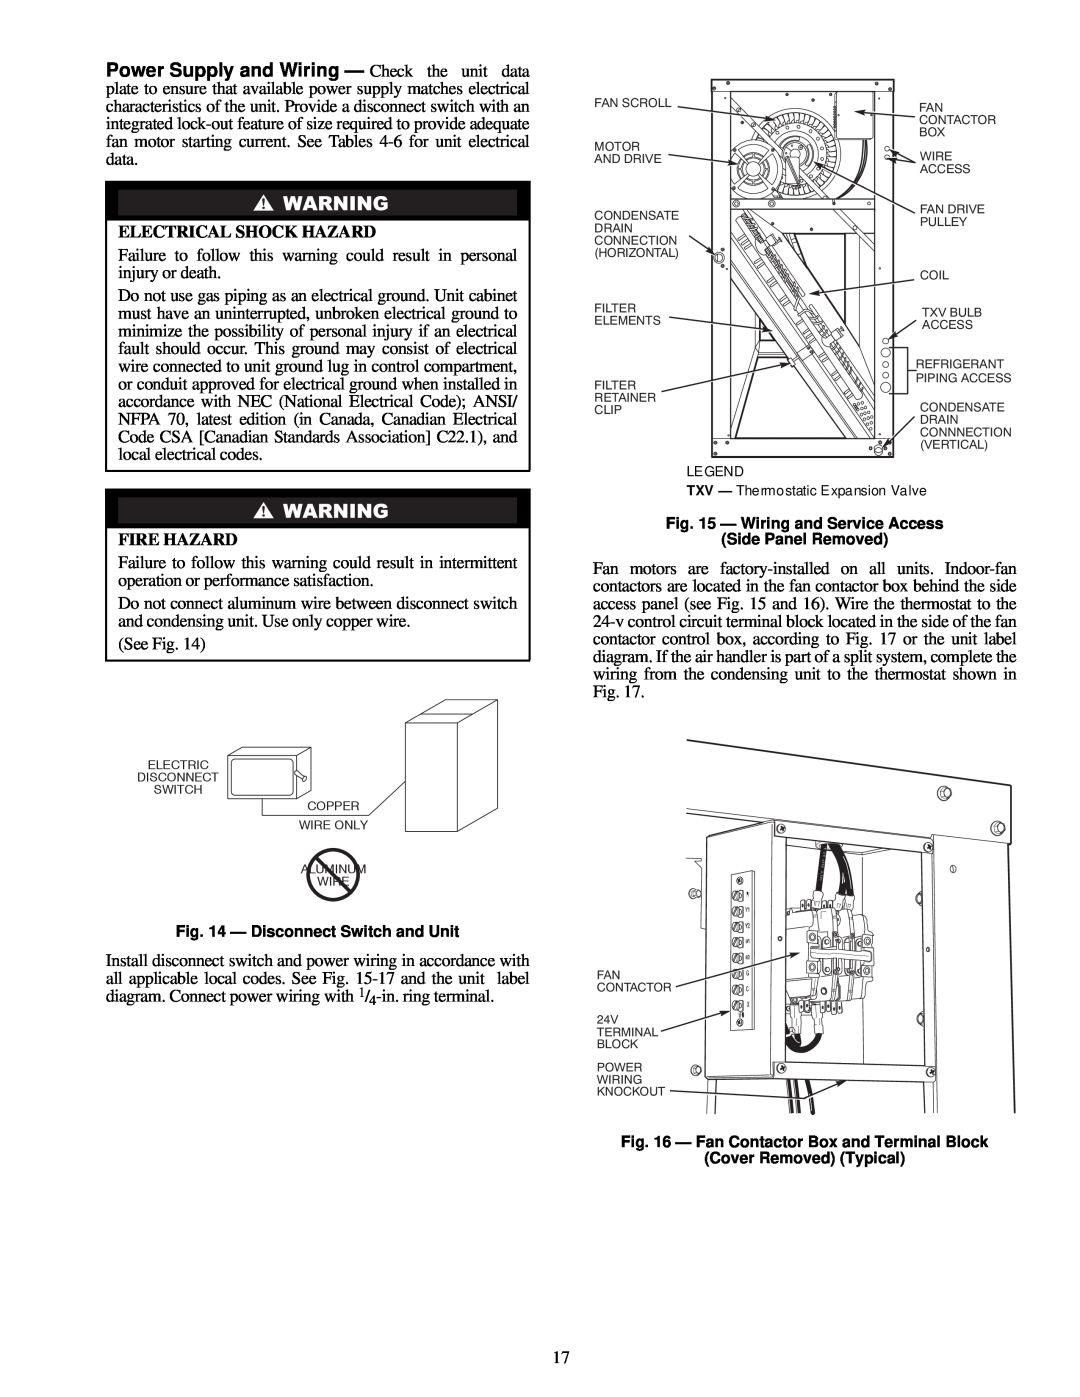 Carrier R-410A manual Fire Hazard, Electrical Shock Hazard 